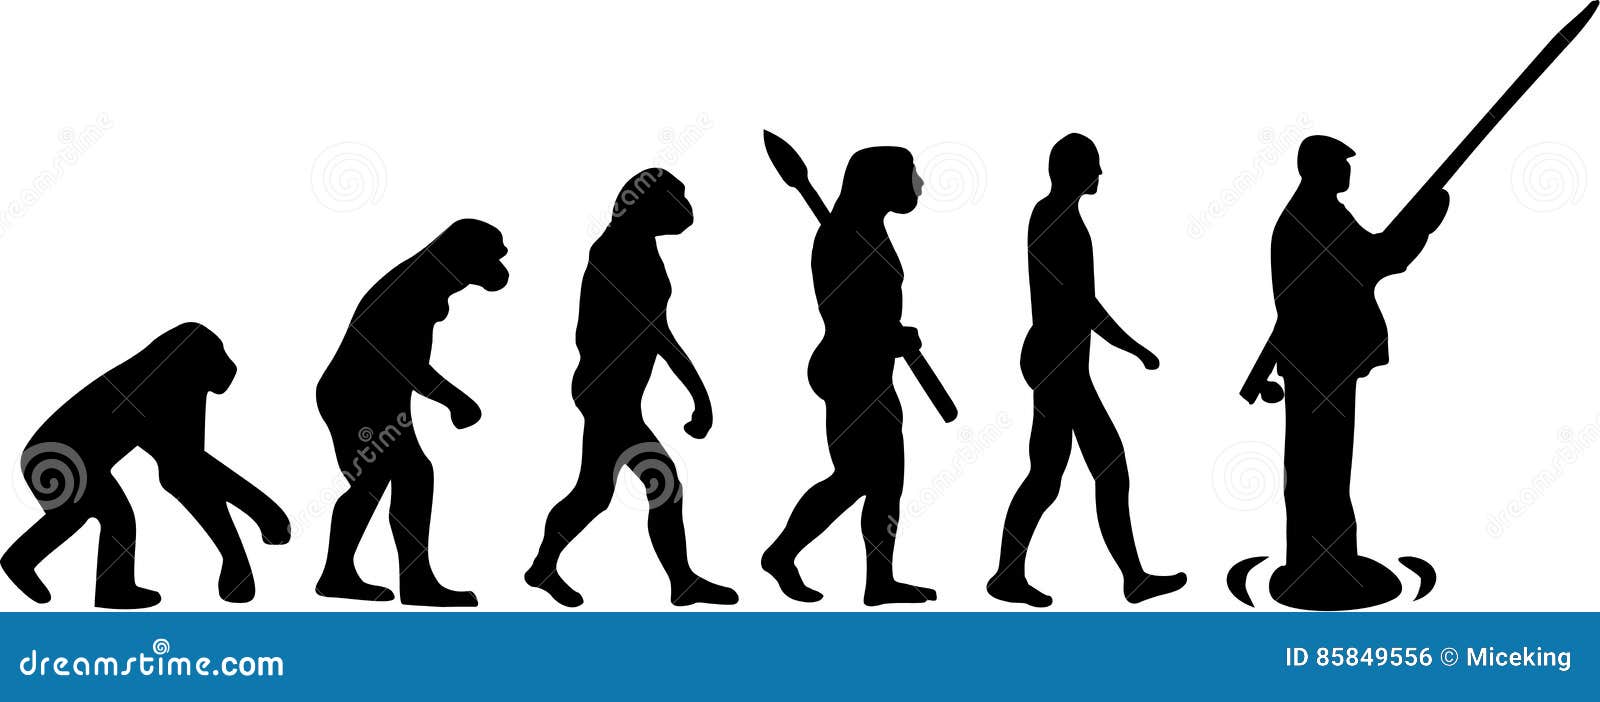 Evolution of a fishing man stock vector. Illustration of darwin